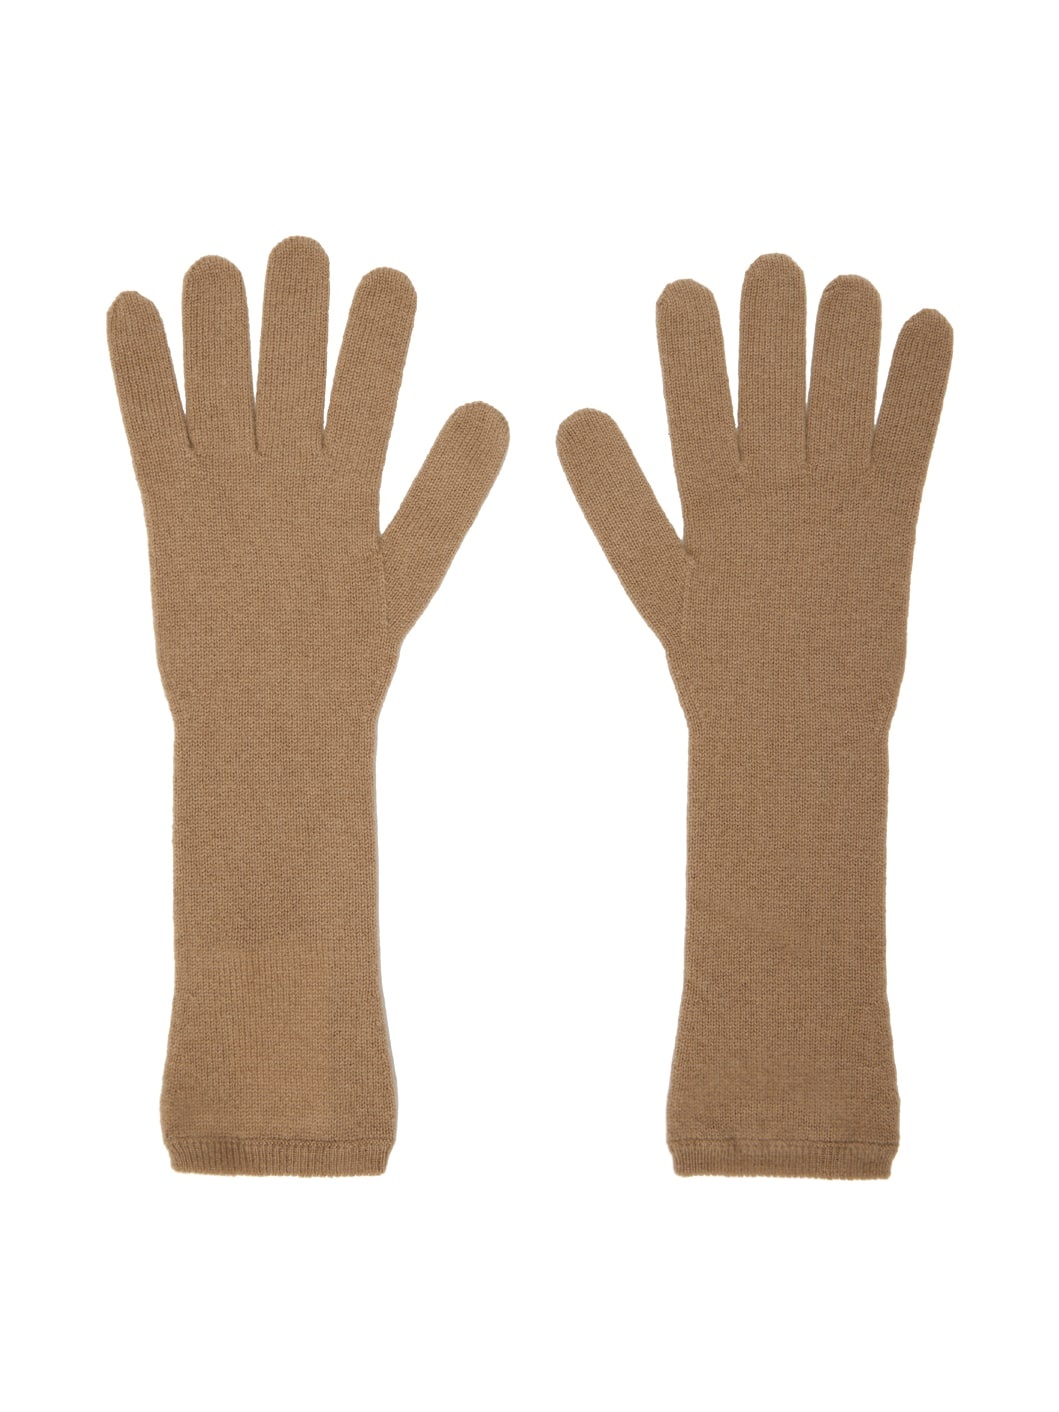 Tan Oglio Gloves - 3